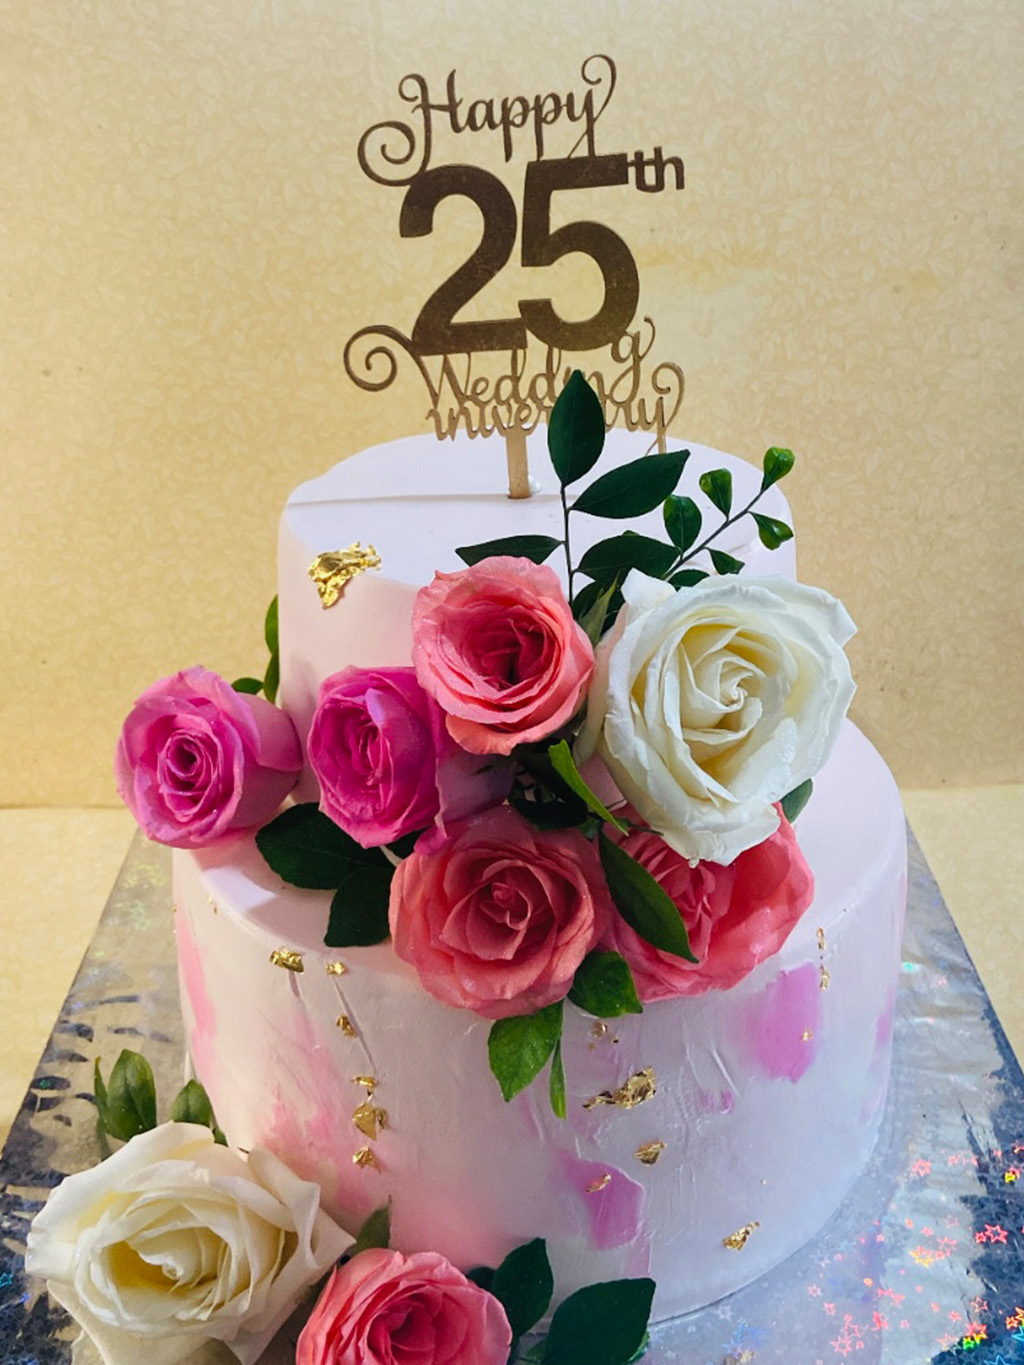 Kitsch Wedding Cakes: 17 Instagram-Worthy Wedding Cakes - hitched.co.uk